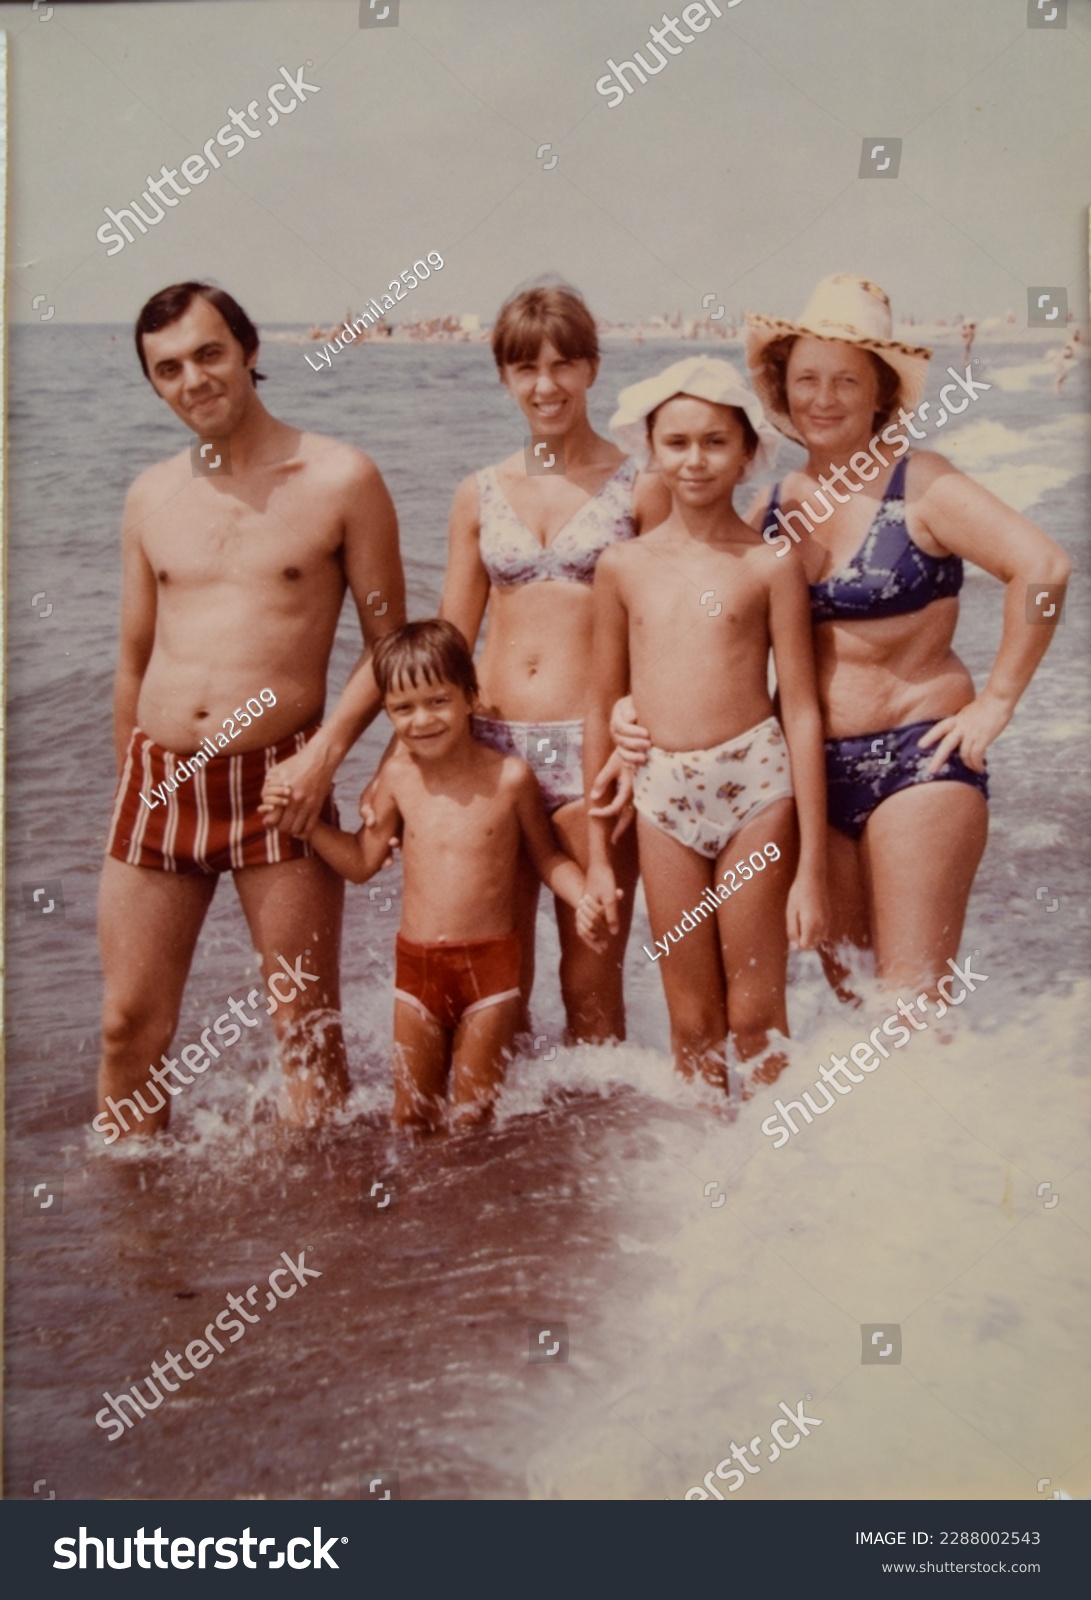 christina pinet add photo pics of nudist families